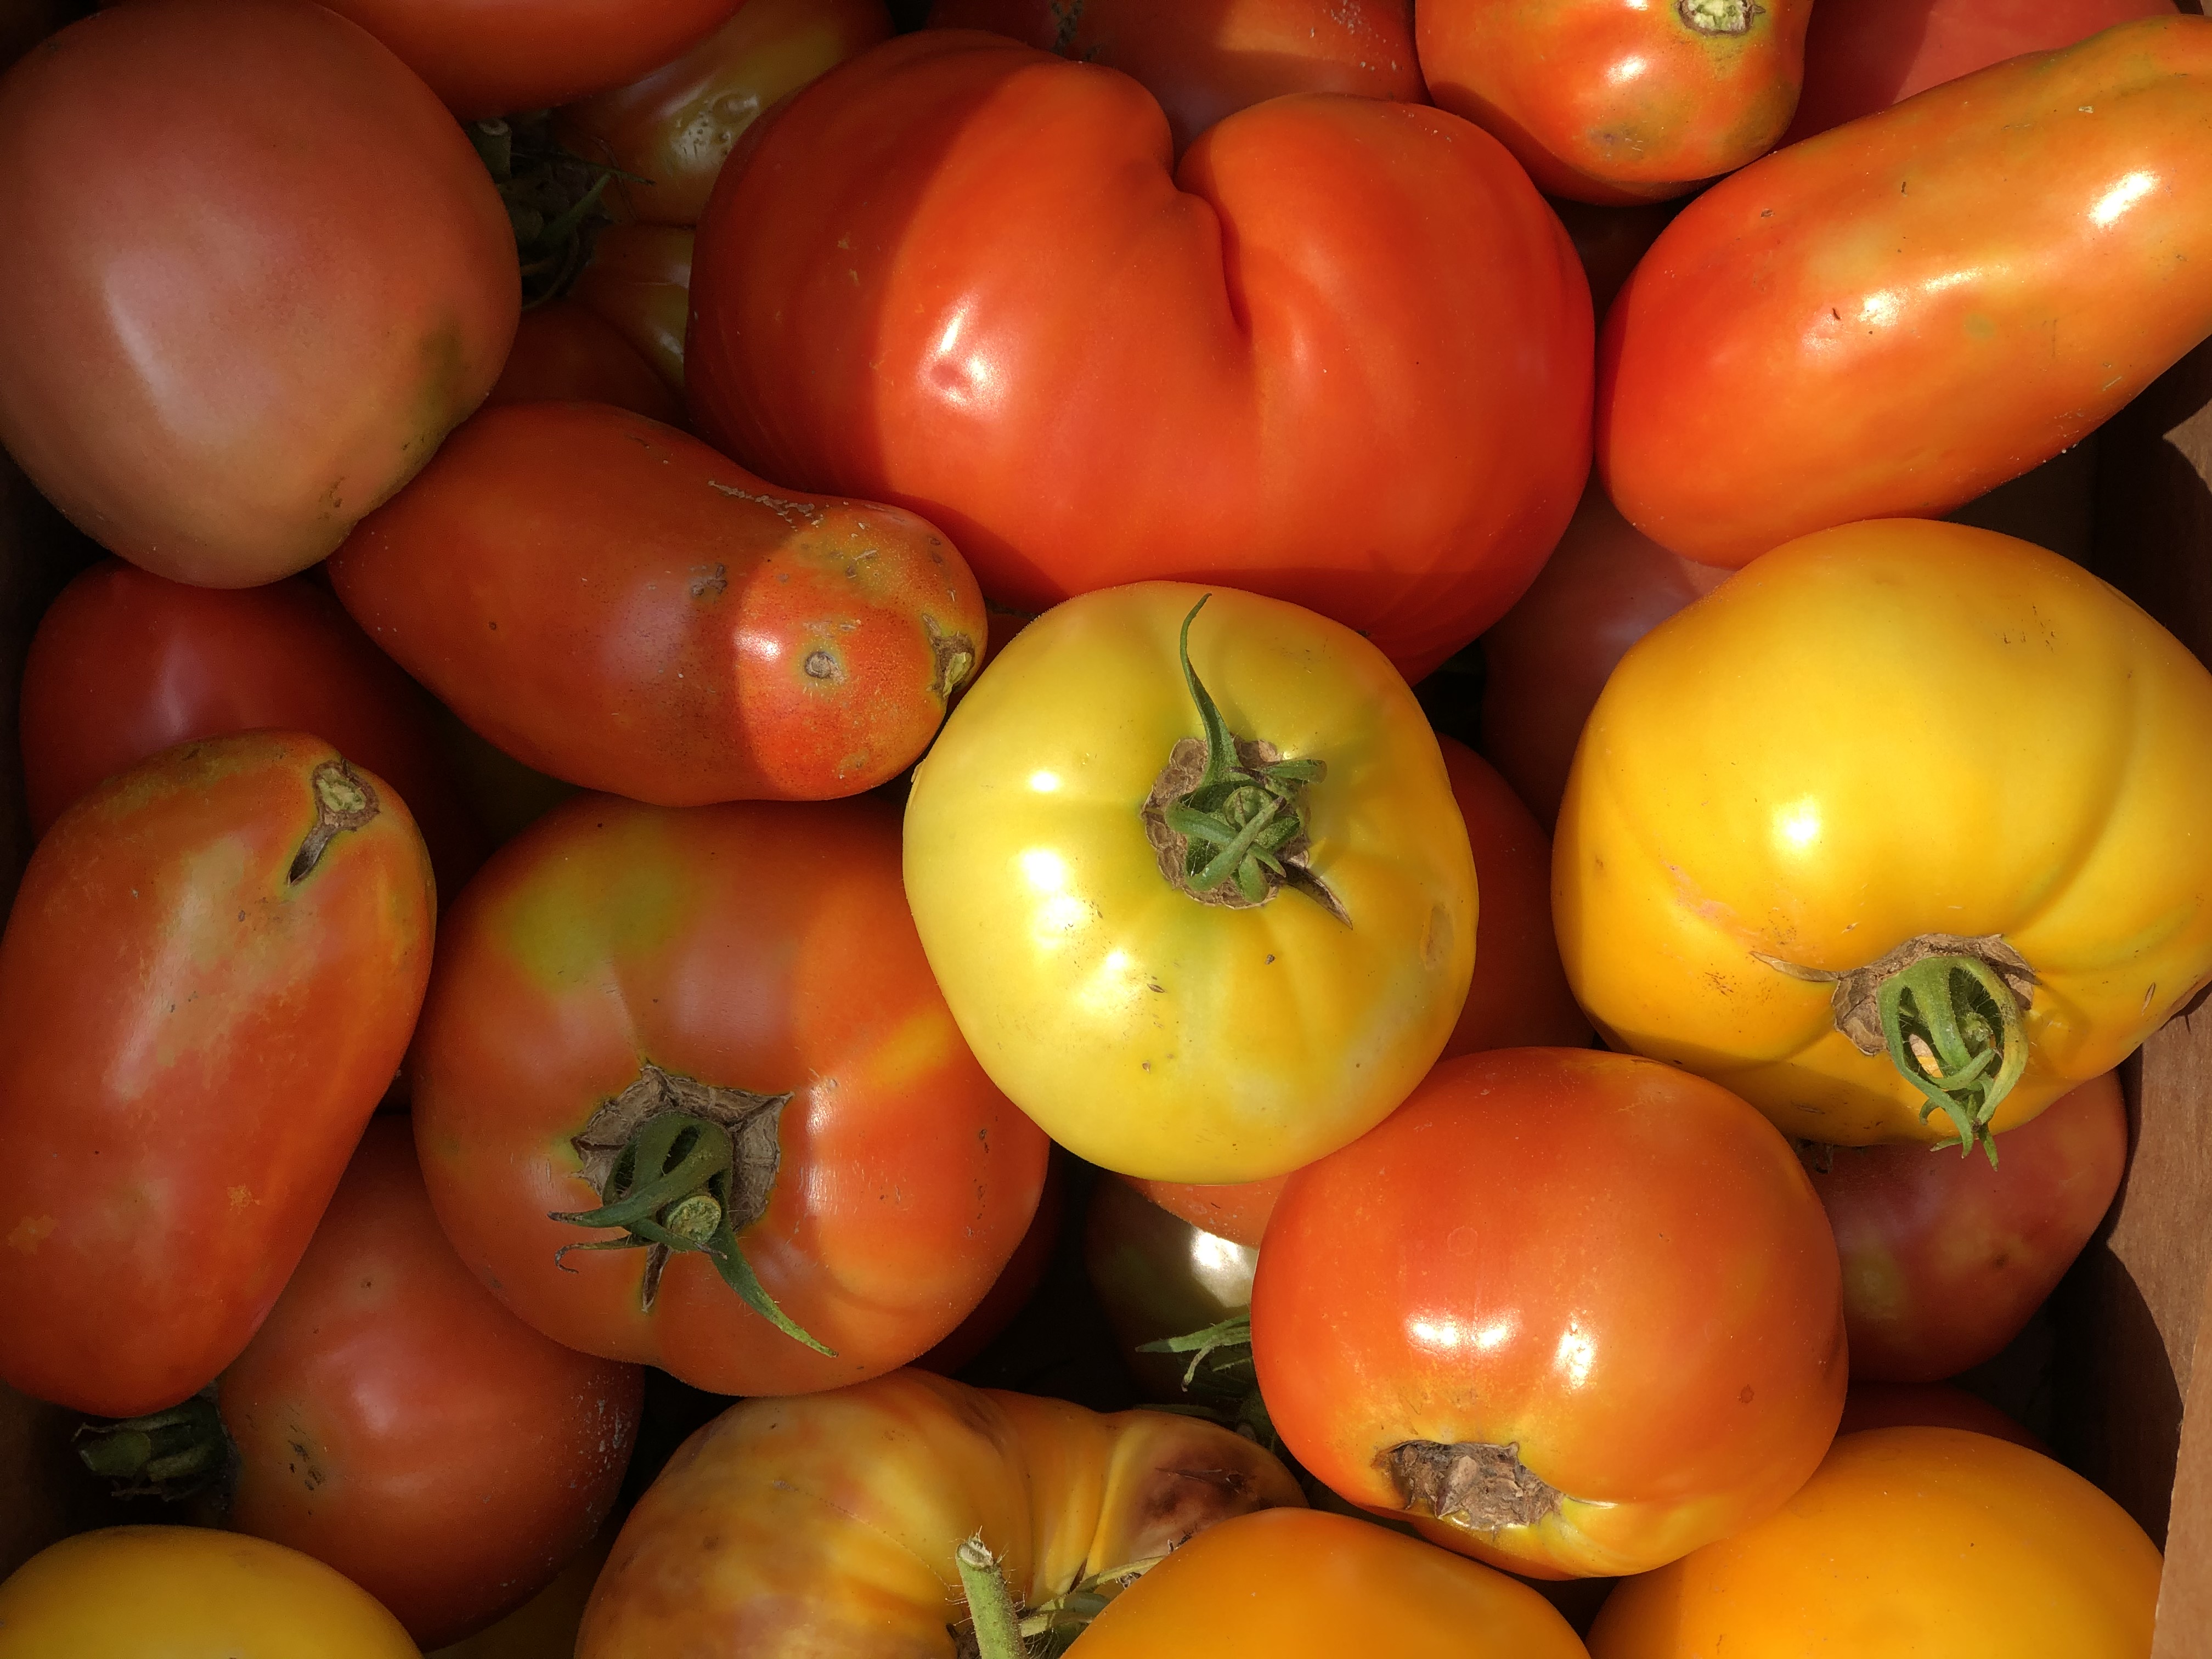 A box of mixed tomato varieties. Photo: Celine Richard